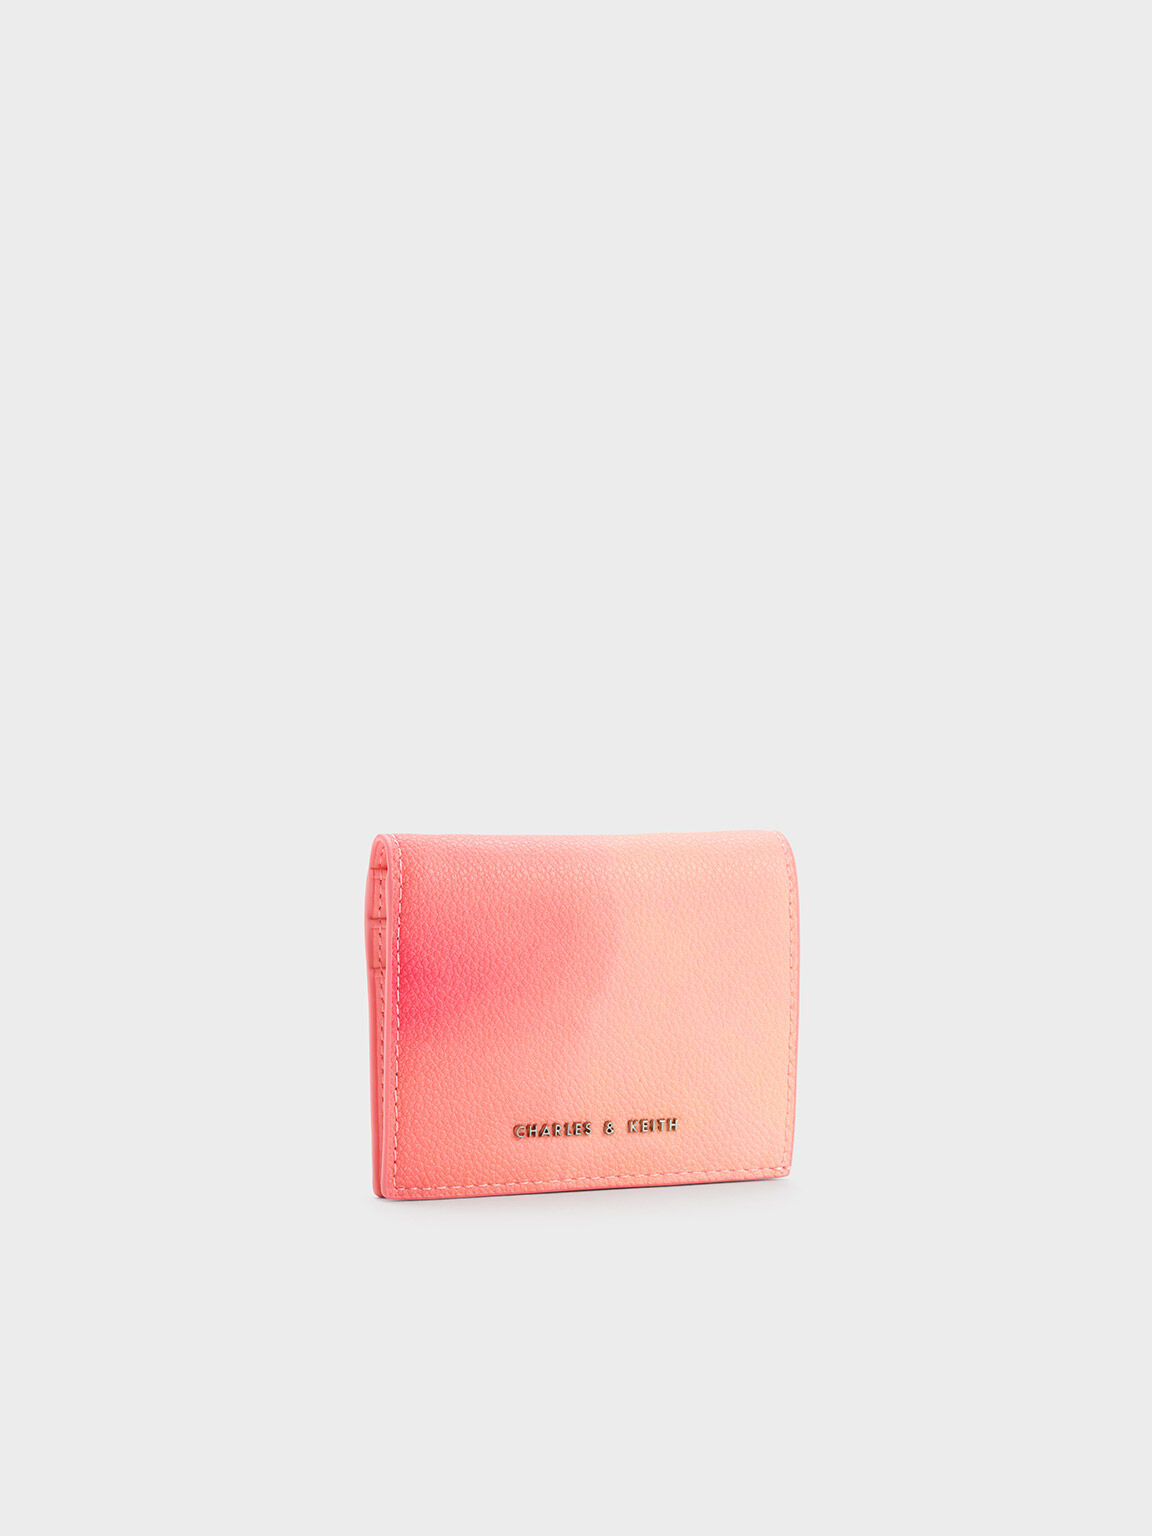 Marble-Print Small Wallet, Pink, hi-res